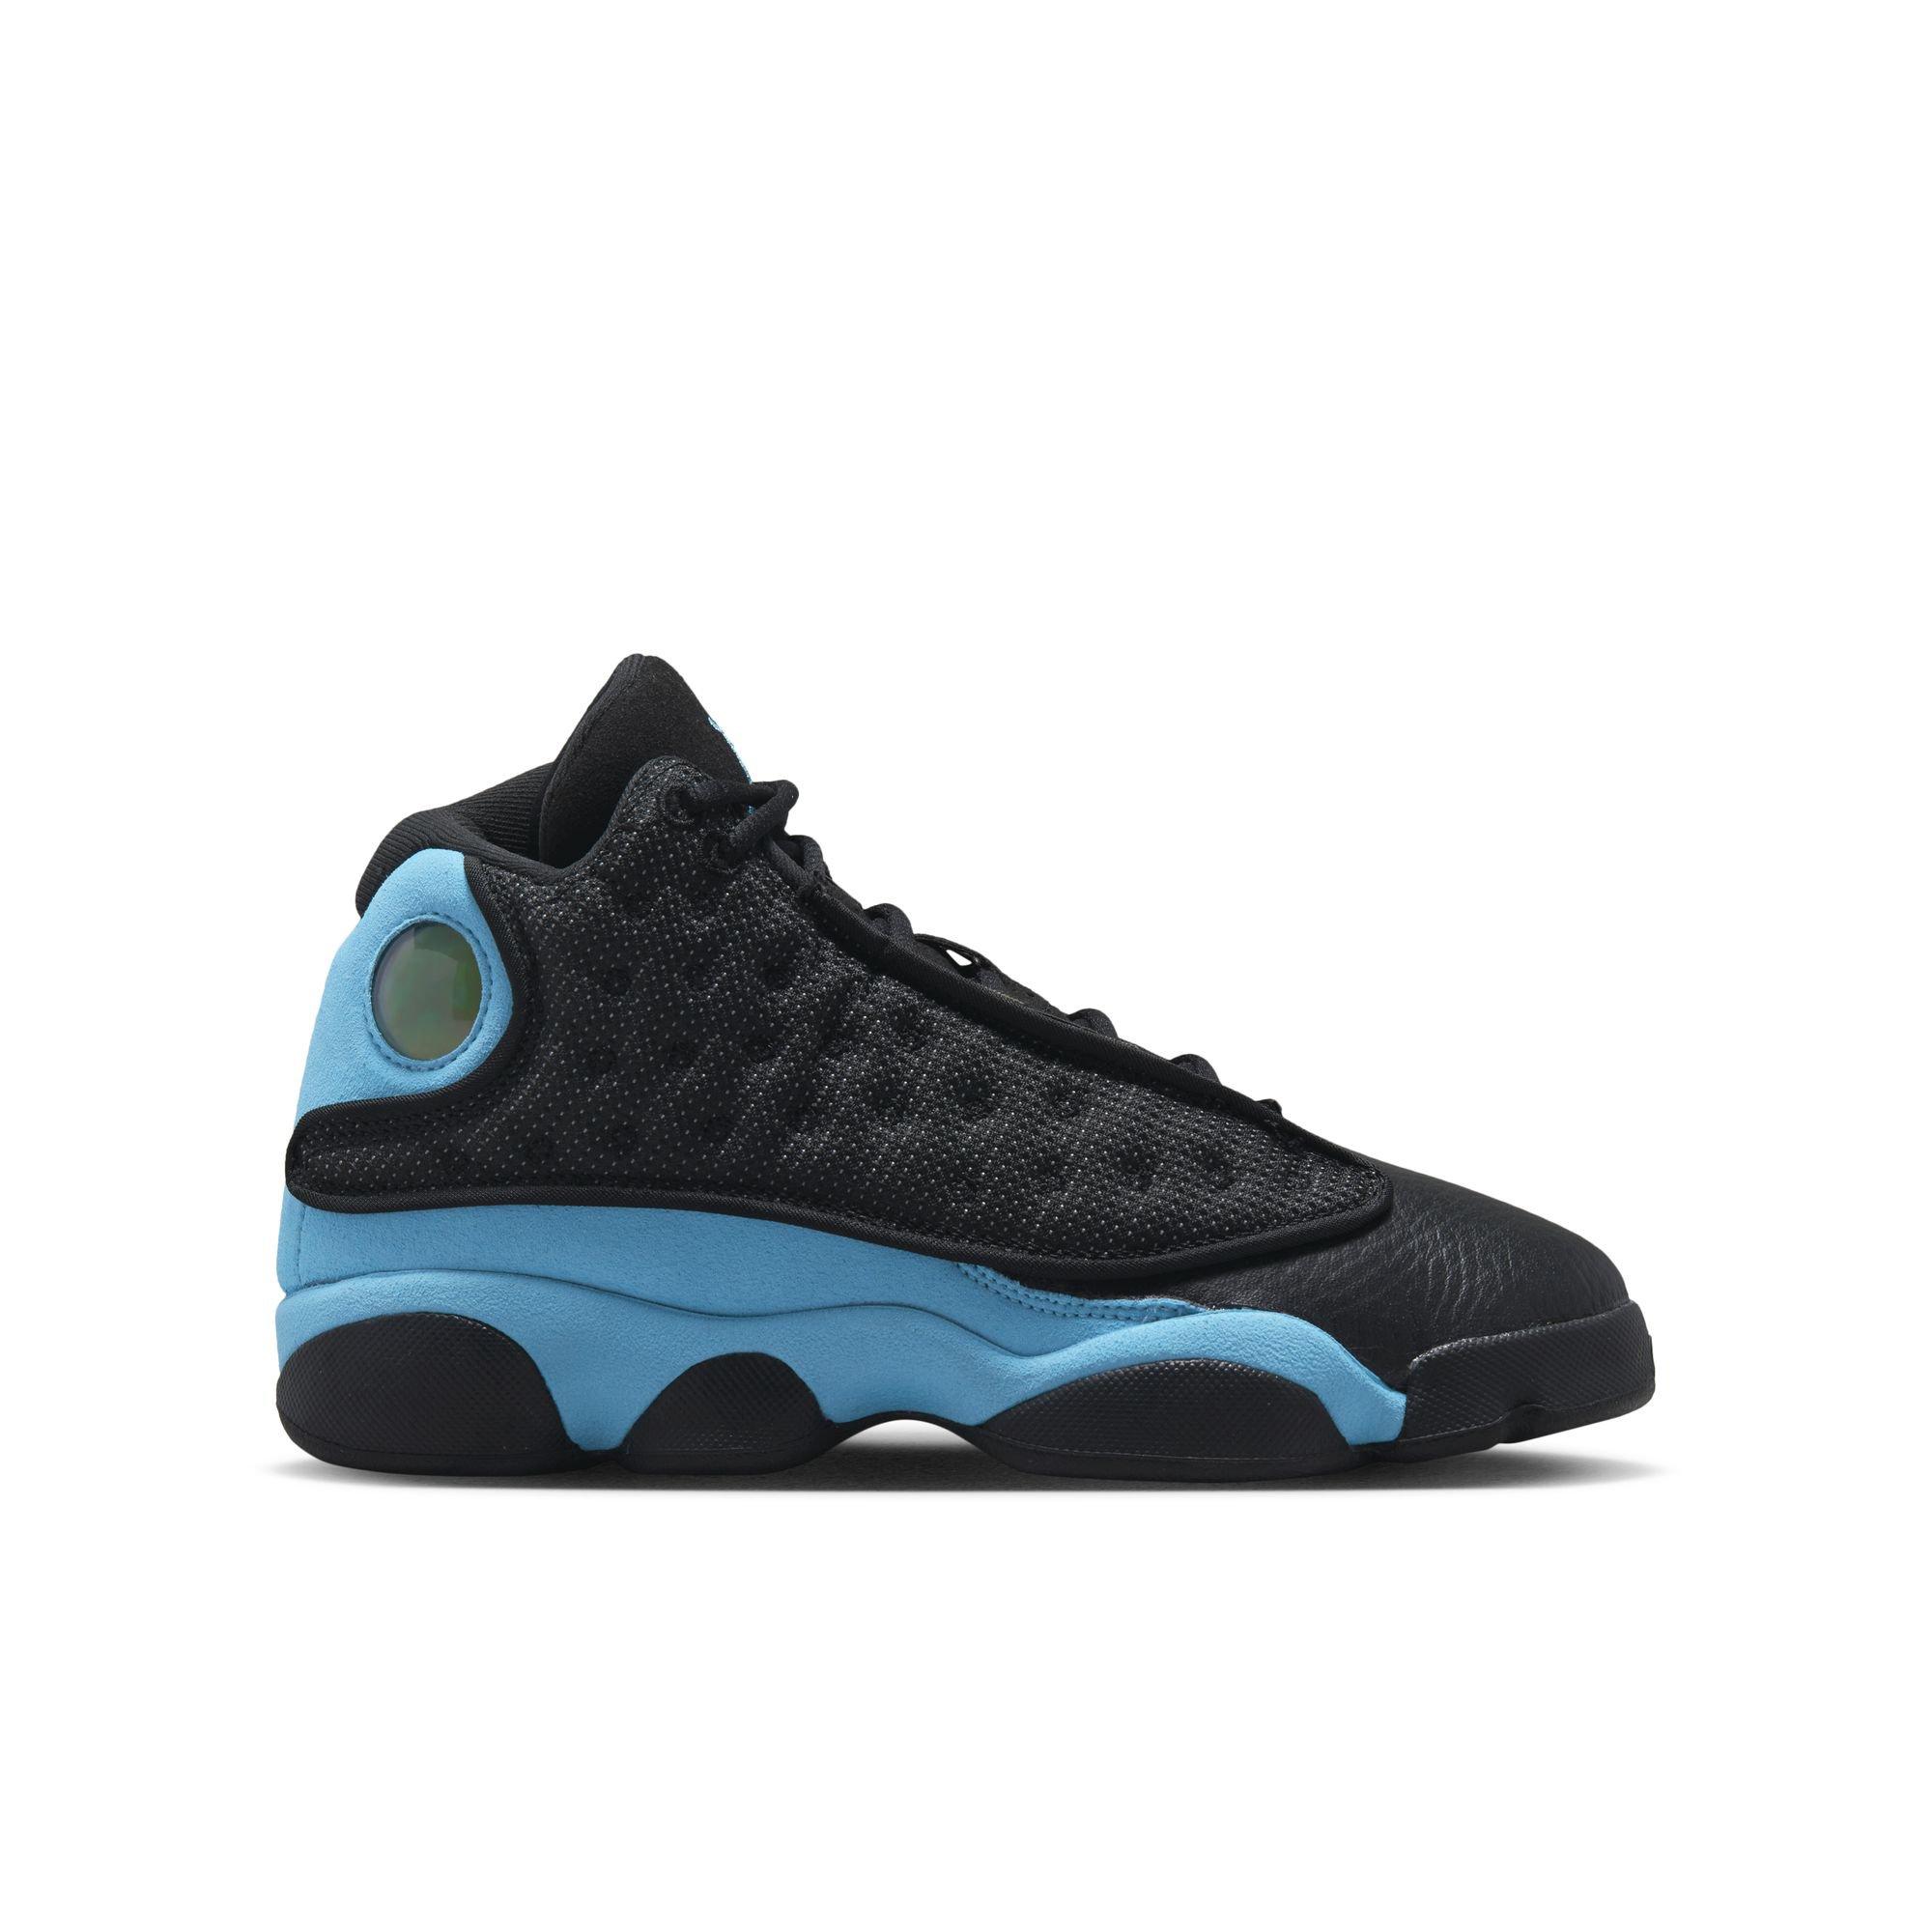 Sneakers Release – Jordan 13 Retro “Black/University Blue/White”  Men’s & Kids’ Shoe Launching 12/23